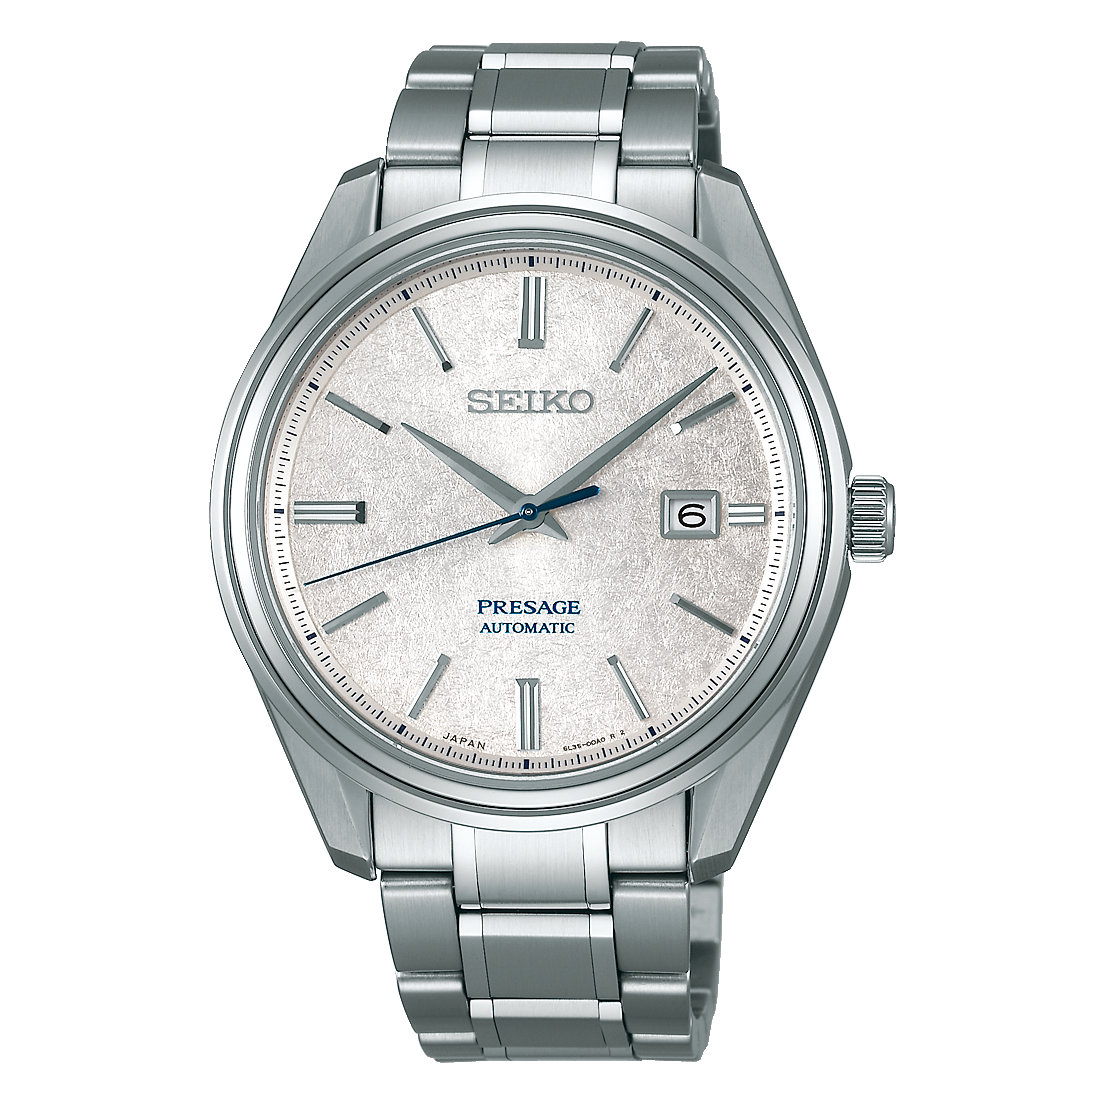 Seiko SARA015 นาฬิกาผู้ชาย Seiko รุ่น SARA015, Presage Mechanical Automatic  Limited Edition 1,881 Pcs. Made in Japan Men's Watch   ศูนย์รวมนาฬิกาแบรนด์เนม และนาฬิกาสวิสหรูของแท้ 100% สินค้าหลากหลายแบรนด์  มาใหม่ทุกสับดาห์ สินค้าคุณภาพ ...